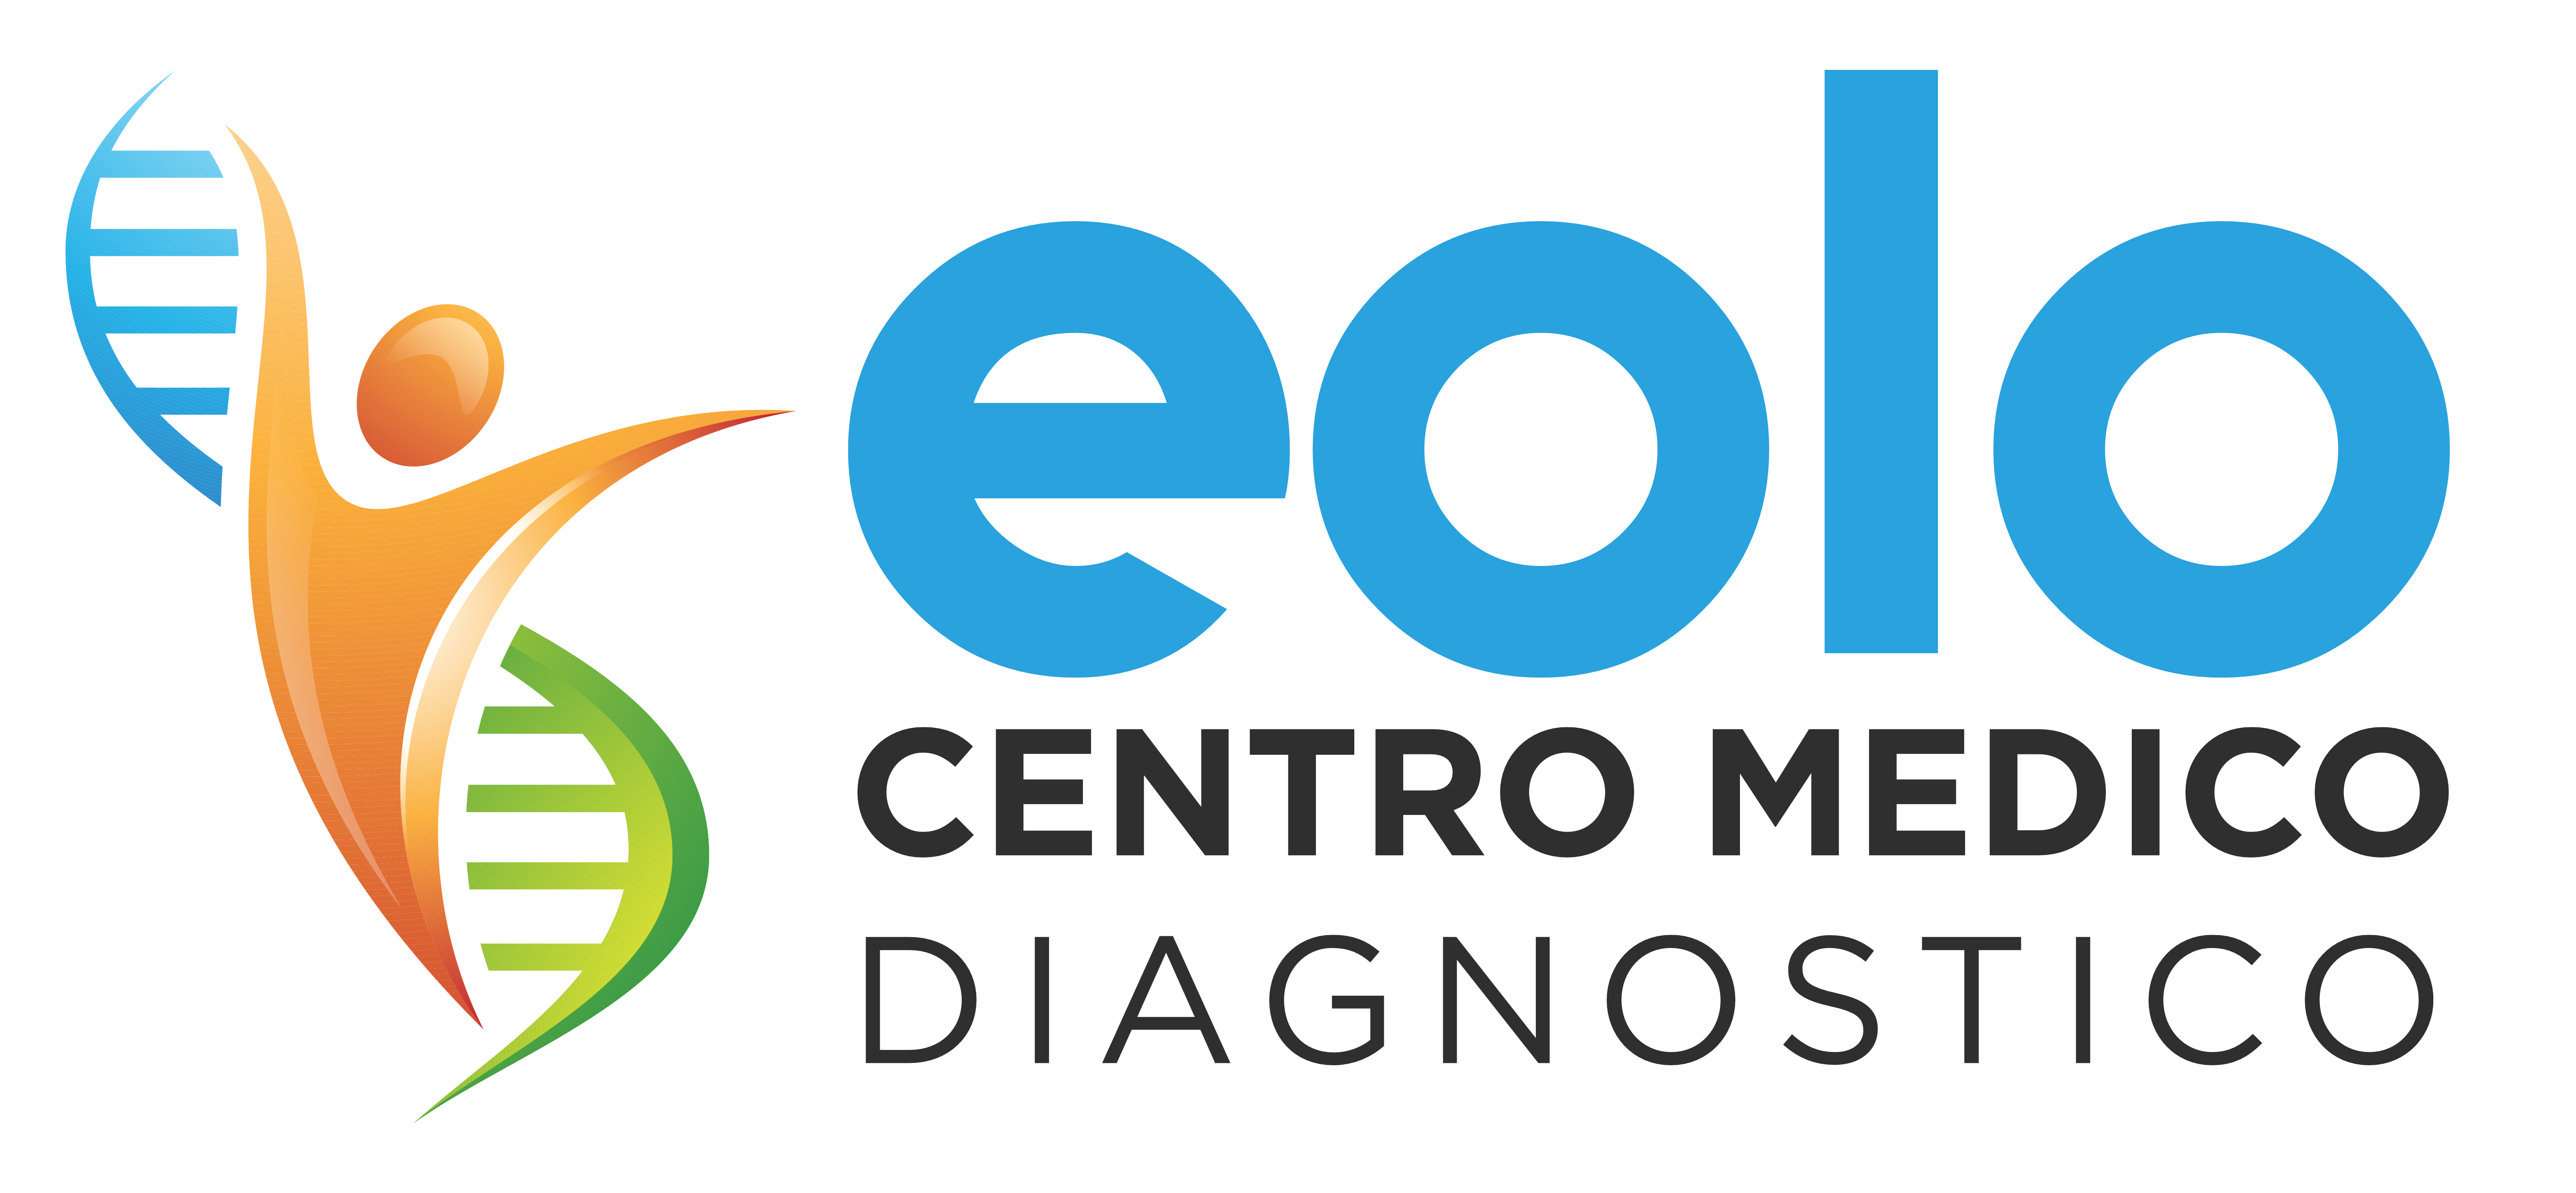 EOLO Centro Medico Diagnostico